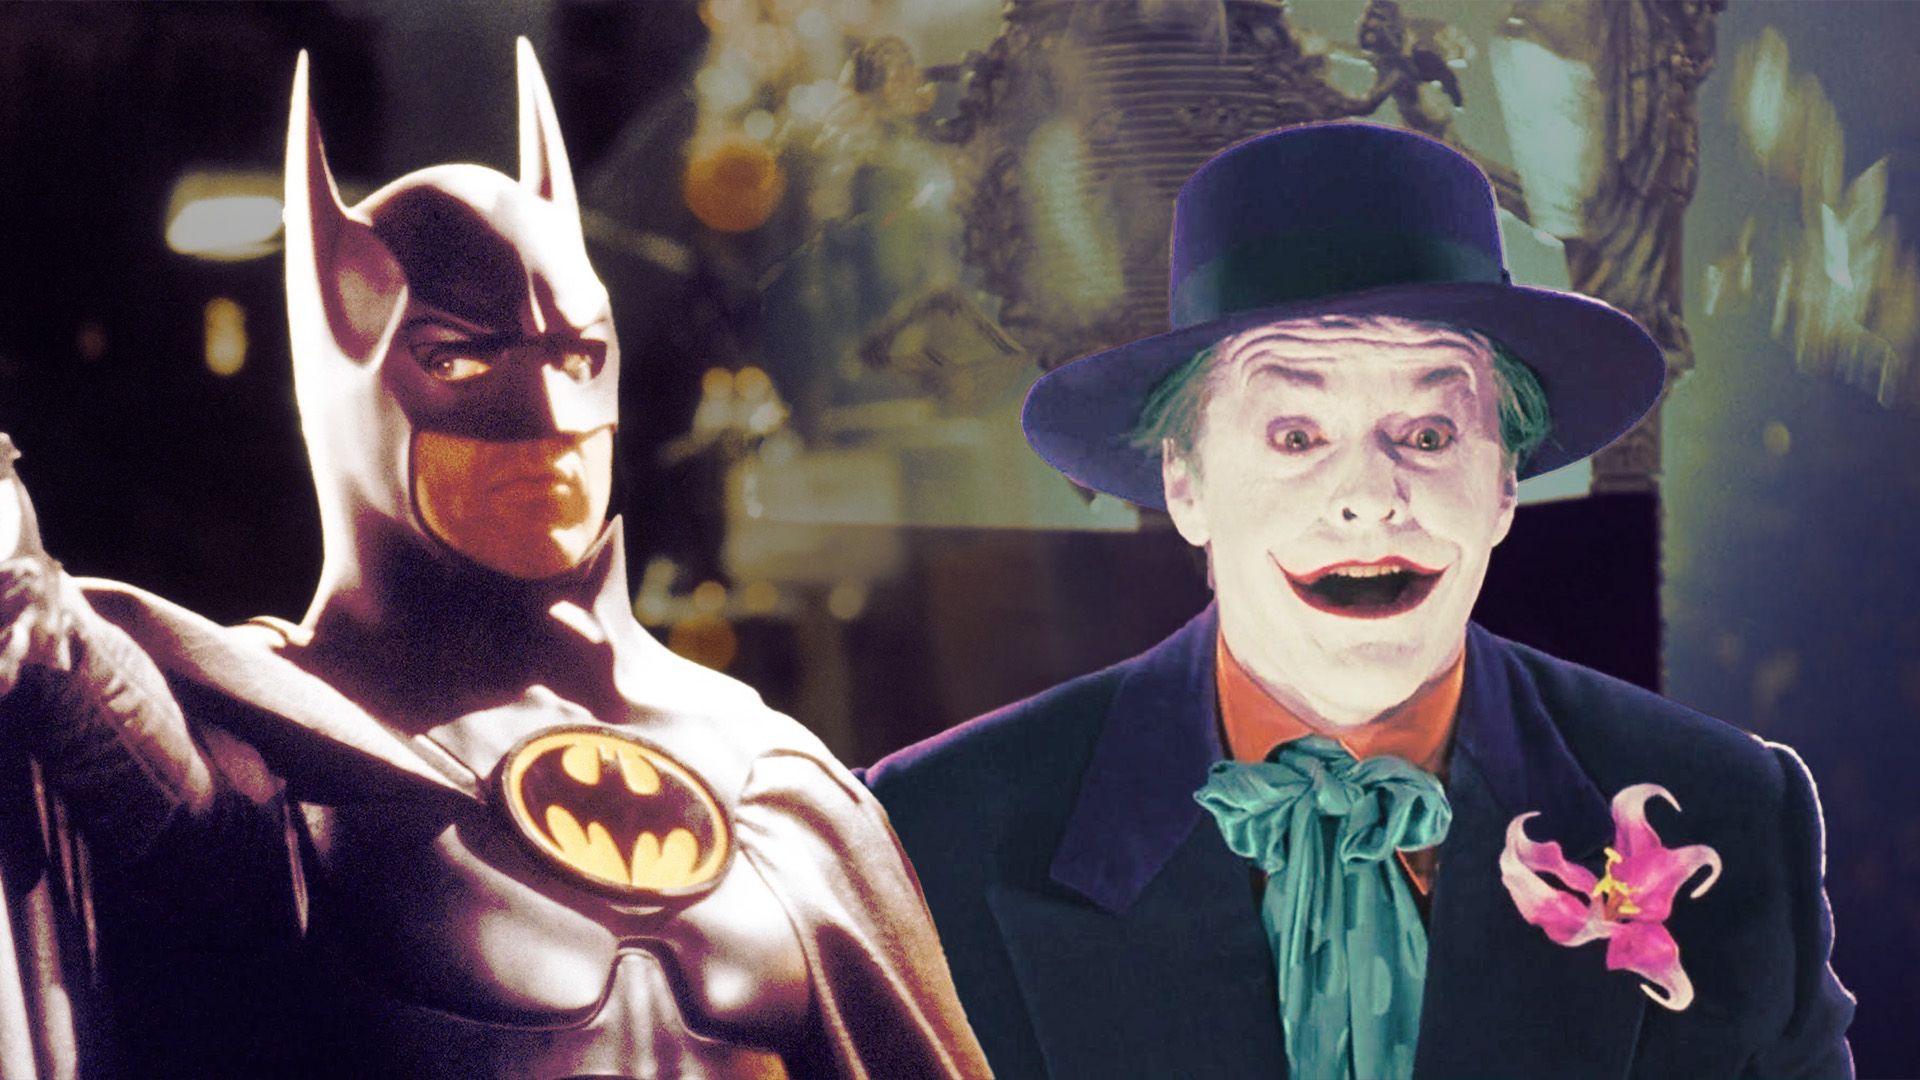 A custom image of Tim Burton's Batman